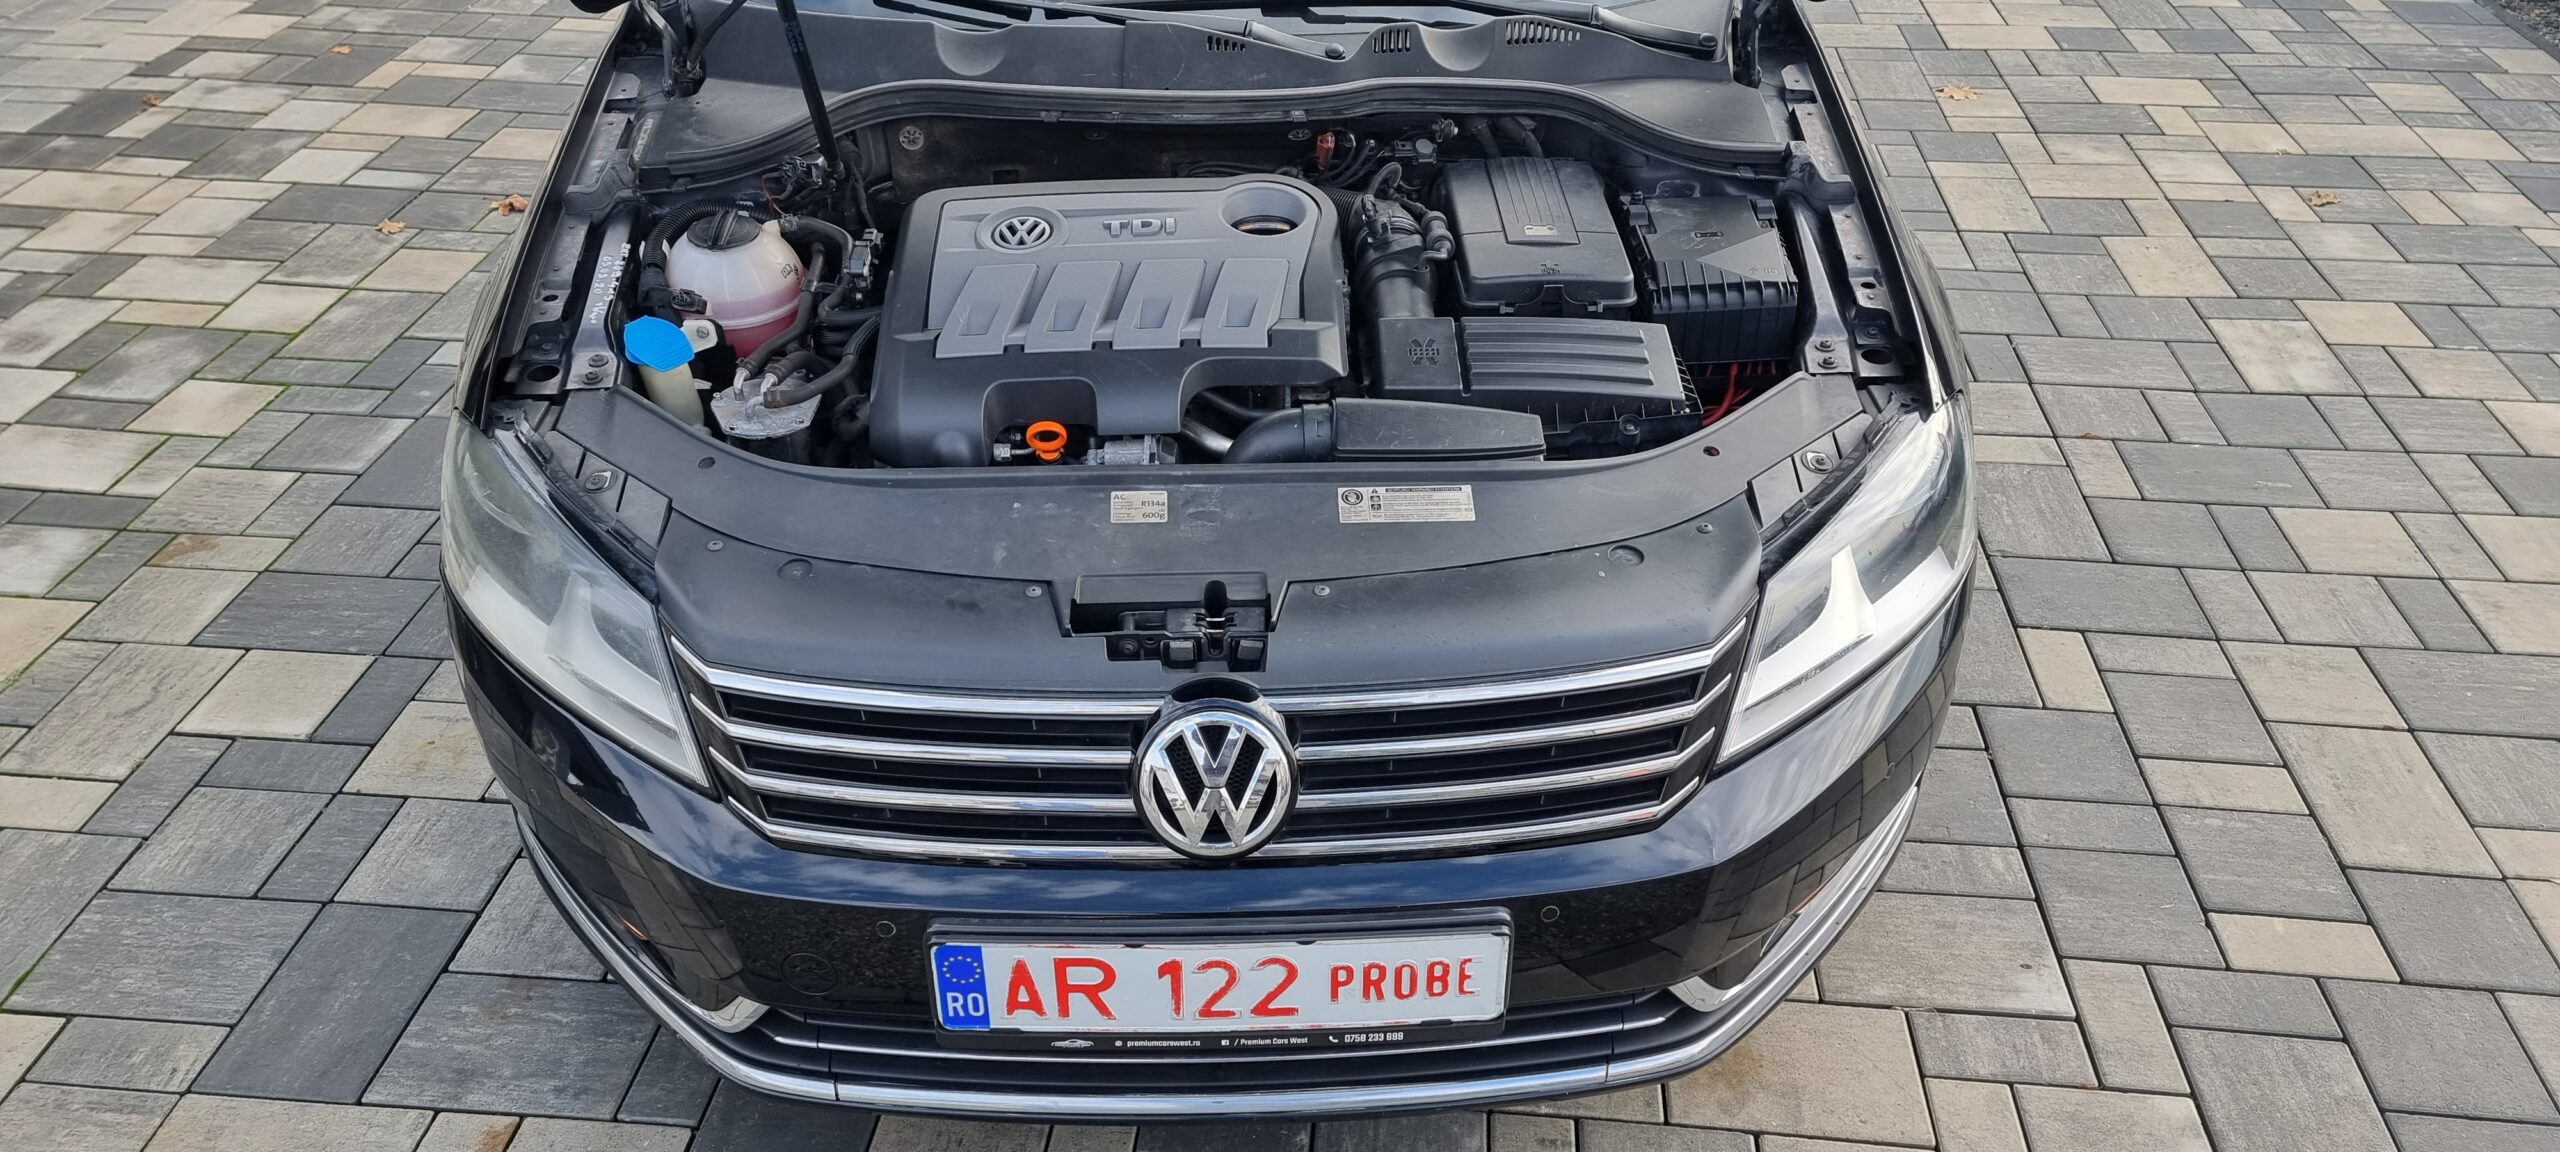 VW PASSAT HIGHLINE 4 MOTION DSG, 2.0 TDI, 170 CP, EURO 5